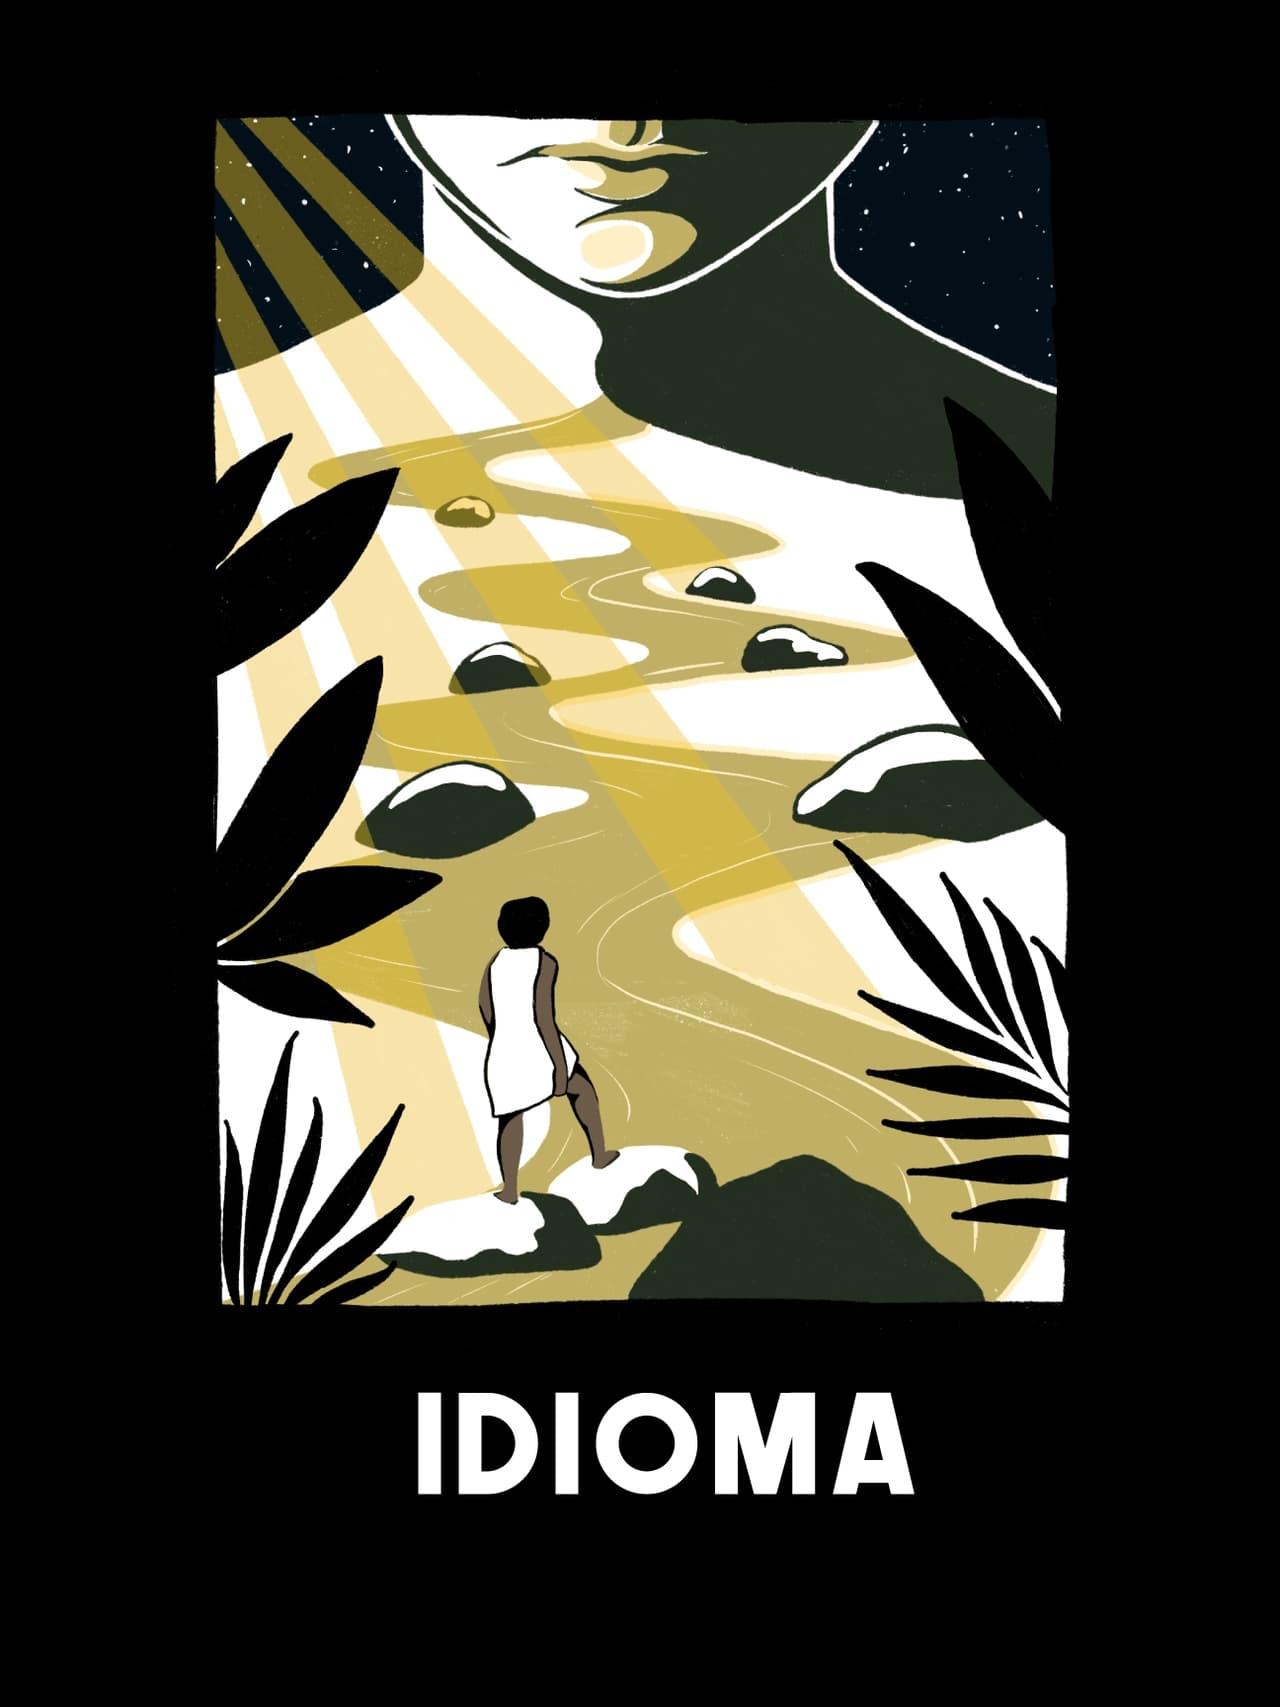 Idioma poster